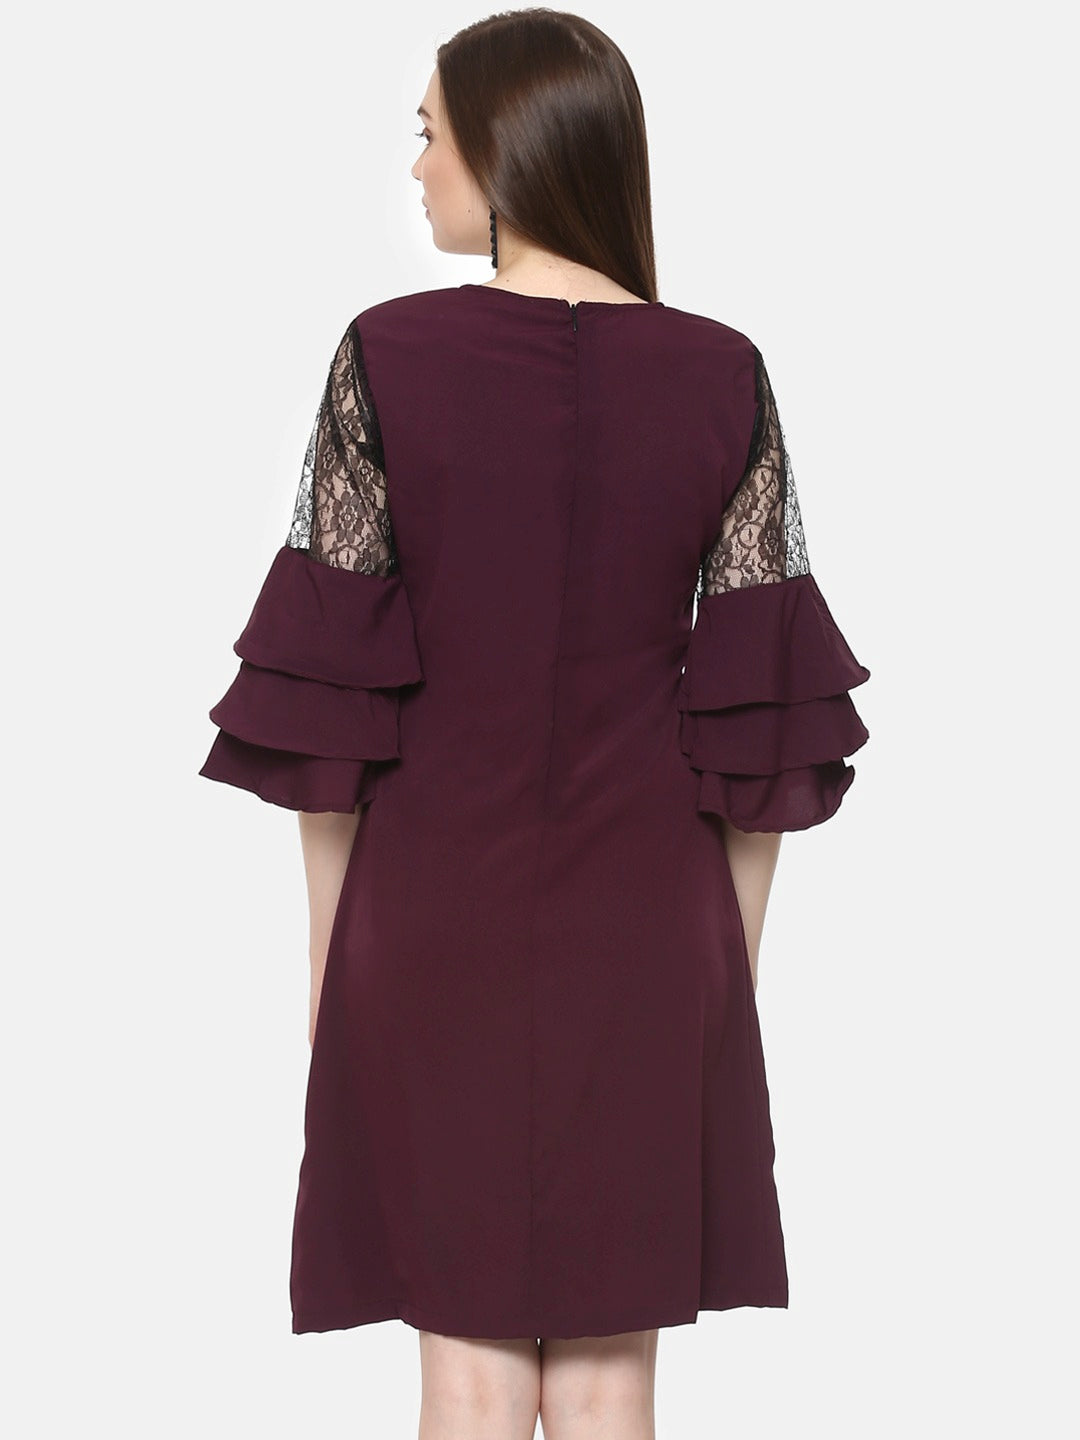 Burgundy Crepe Dress